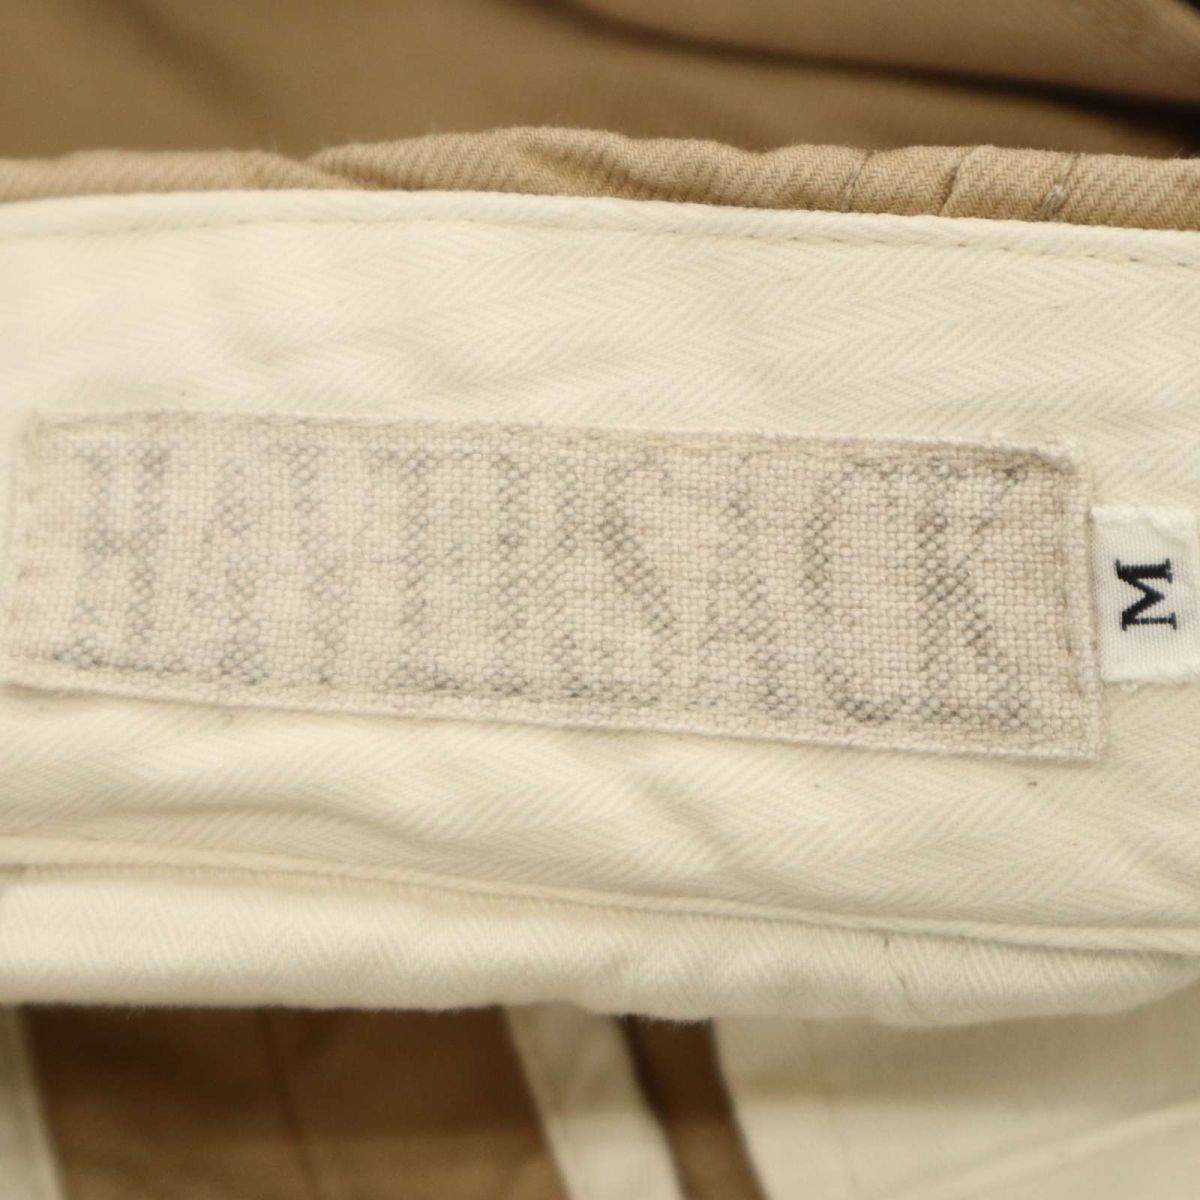 HAVERSACK Haversack весна лето [ лен linen.] распорка рабочие брюки Sz.M мужской сделано в Японии бежевый C4B01382_3#P